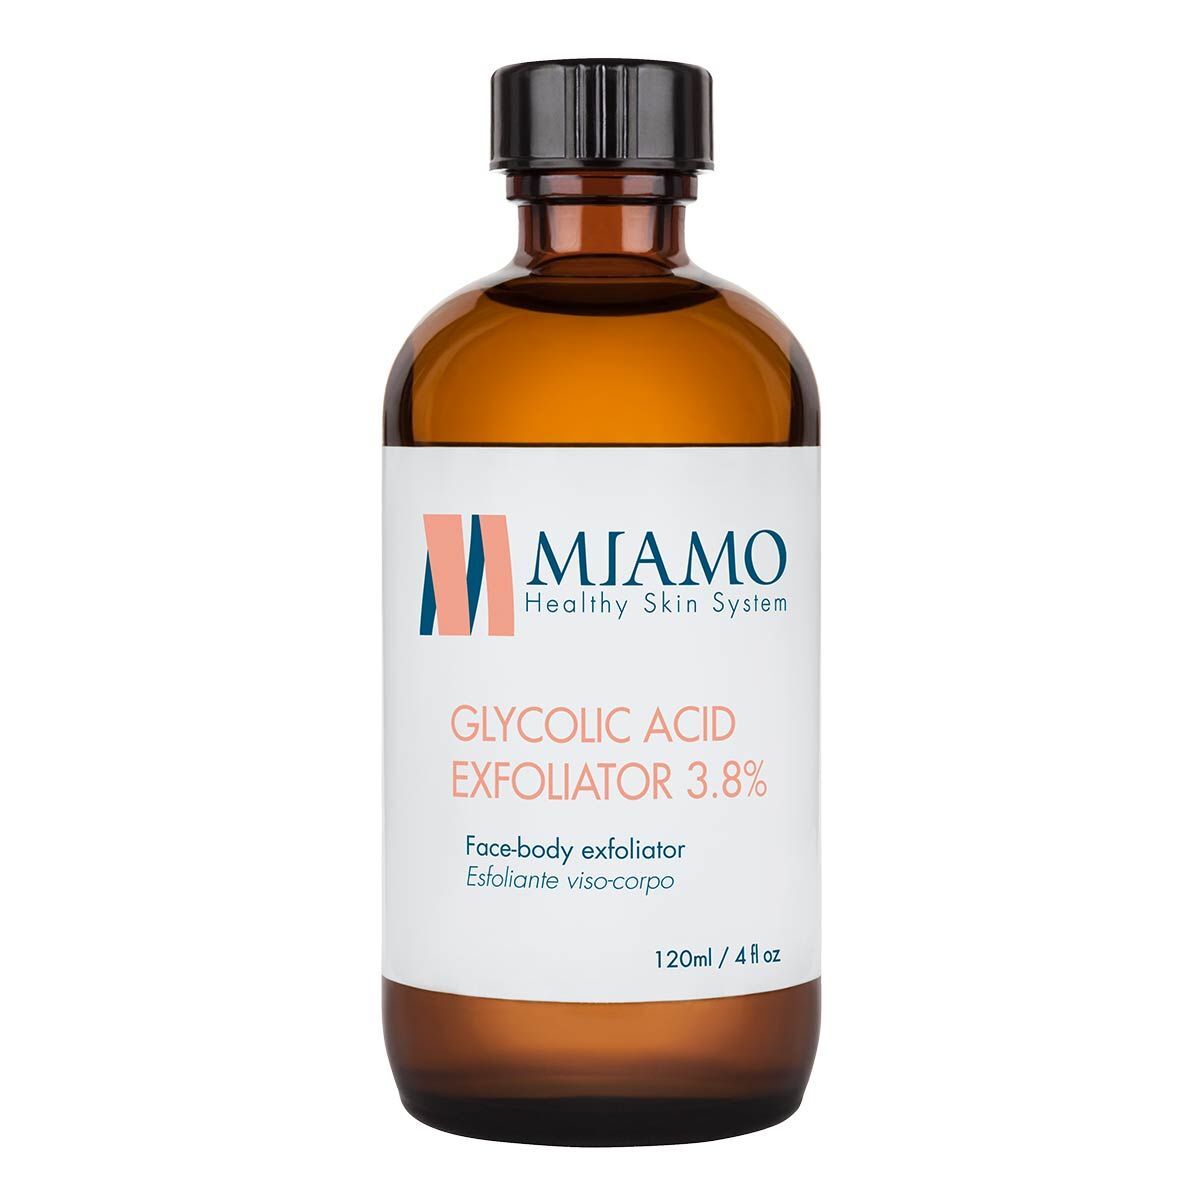 Miamo Glycolic Acid Exfoliator 3.8% Esfoliante Viso-corpo 120ml